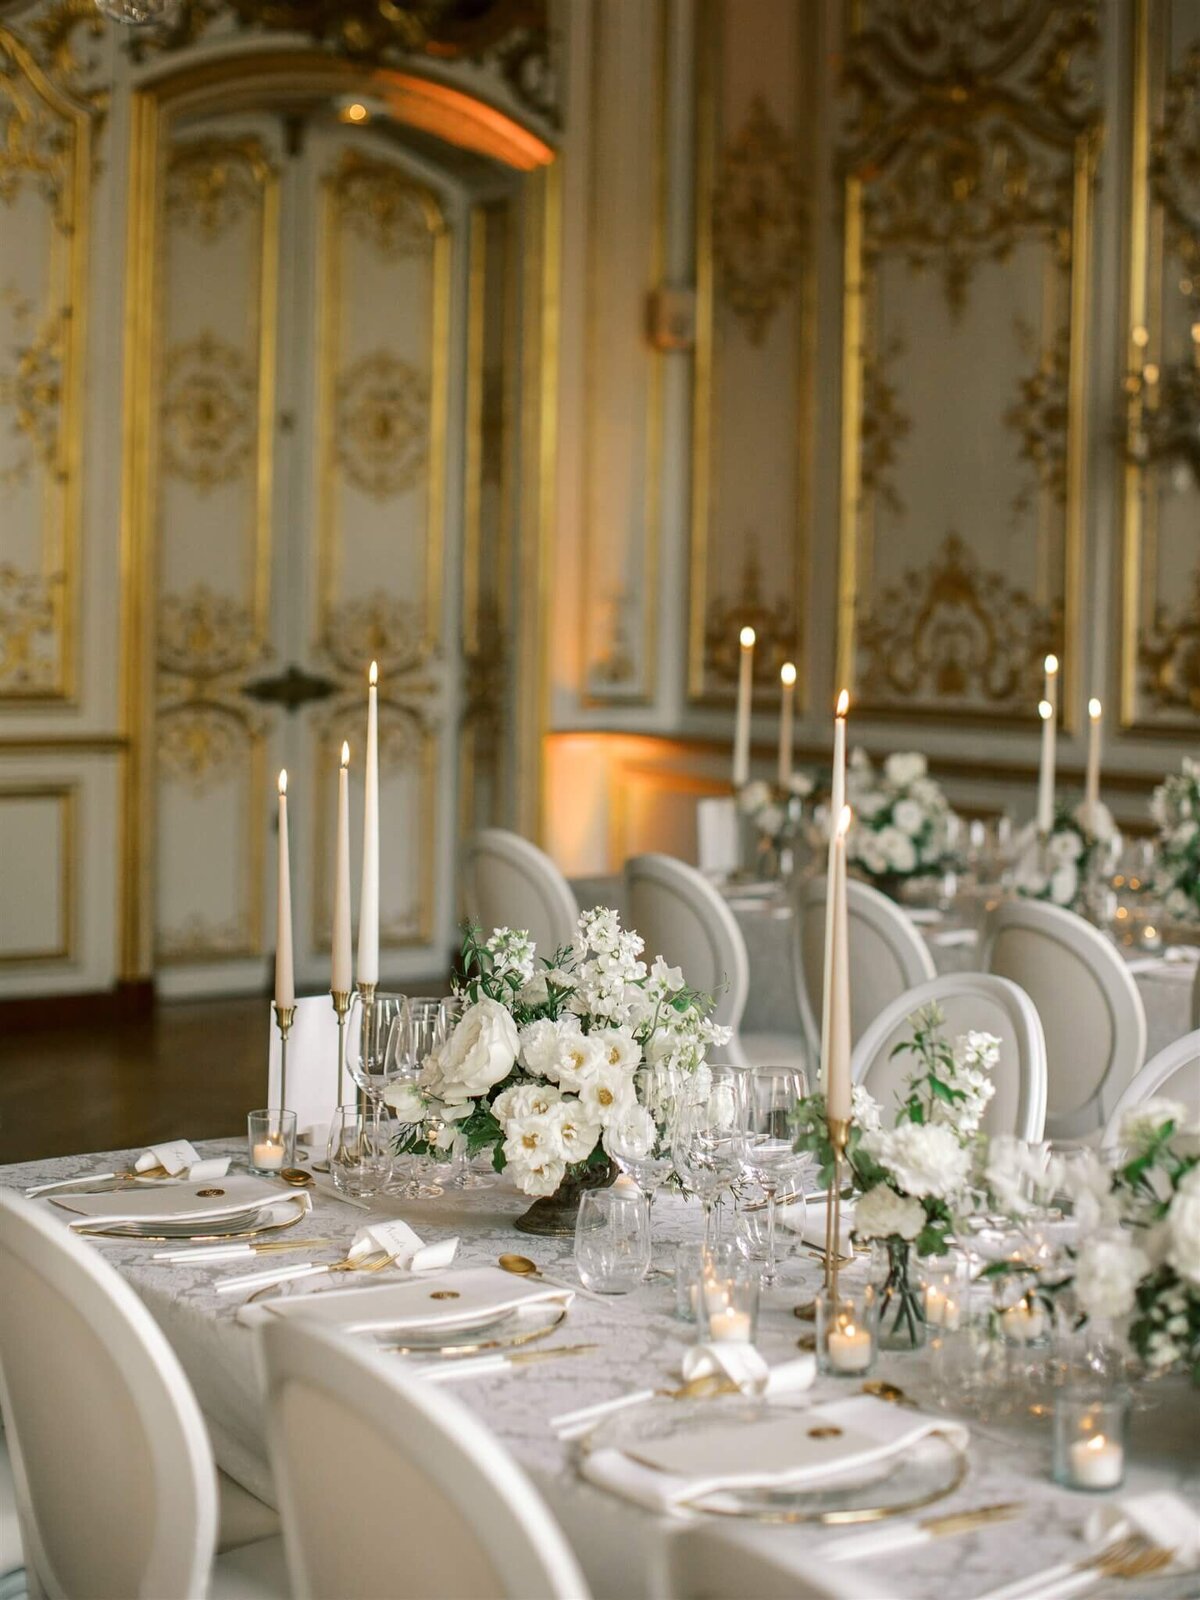 DianeSoteroPhotography_Wedding_StJamesHotel_HotelLeMarois_Paris_France_440